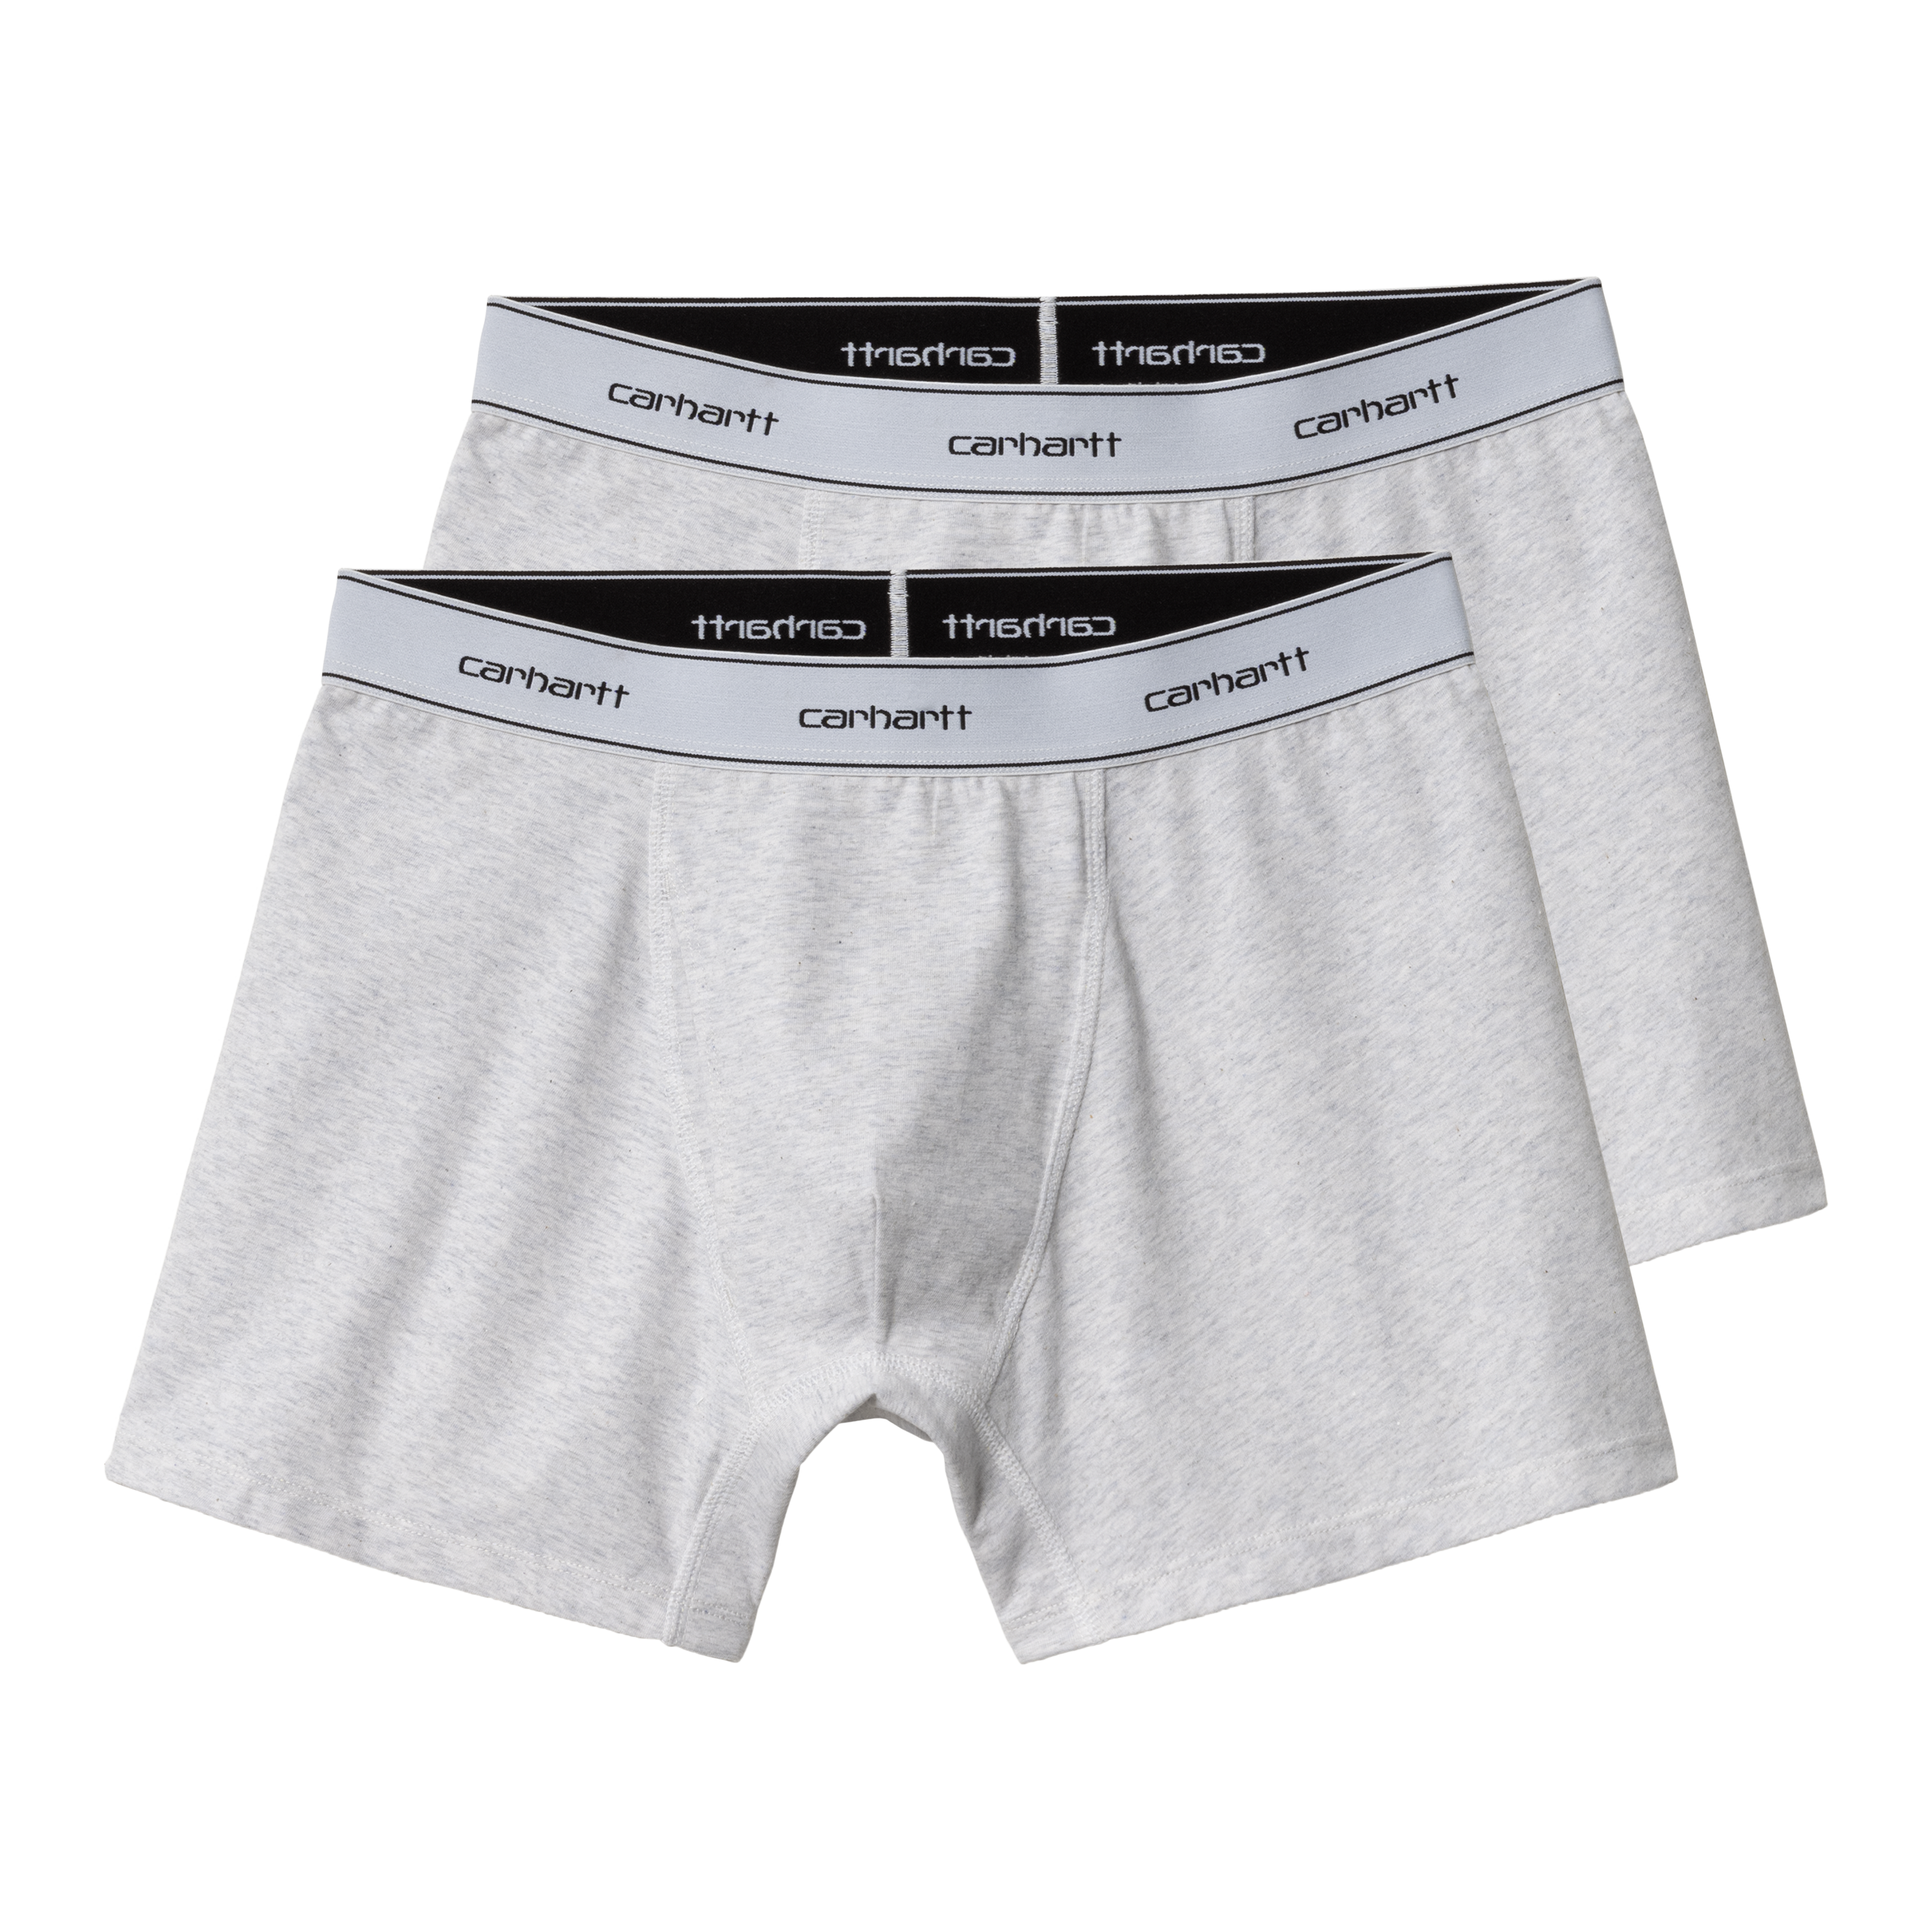 Carhartt Boxer Shorts